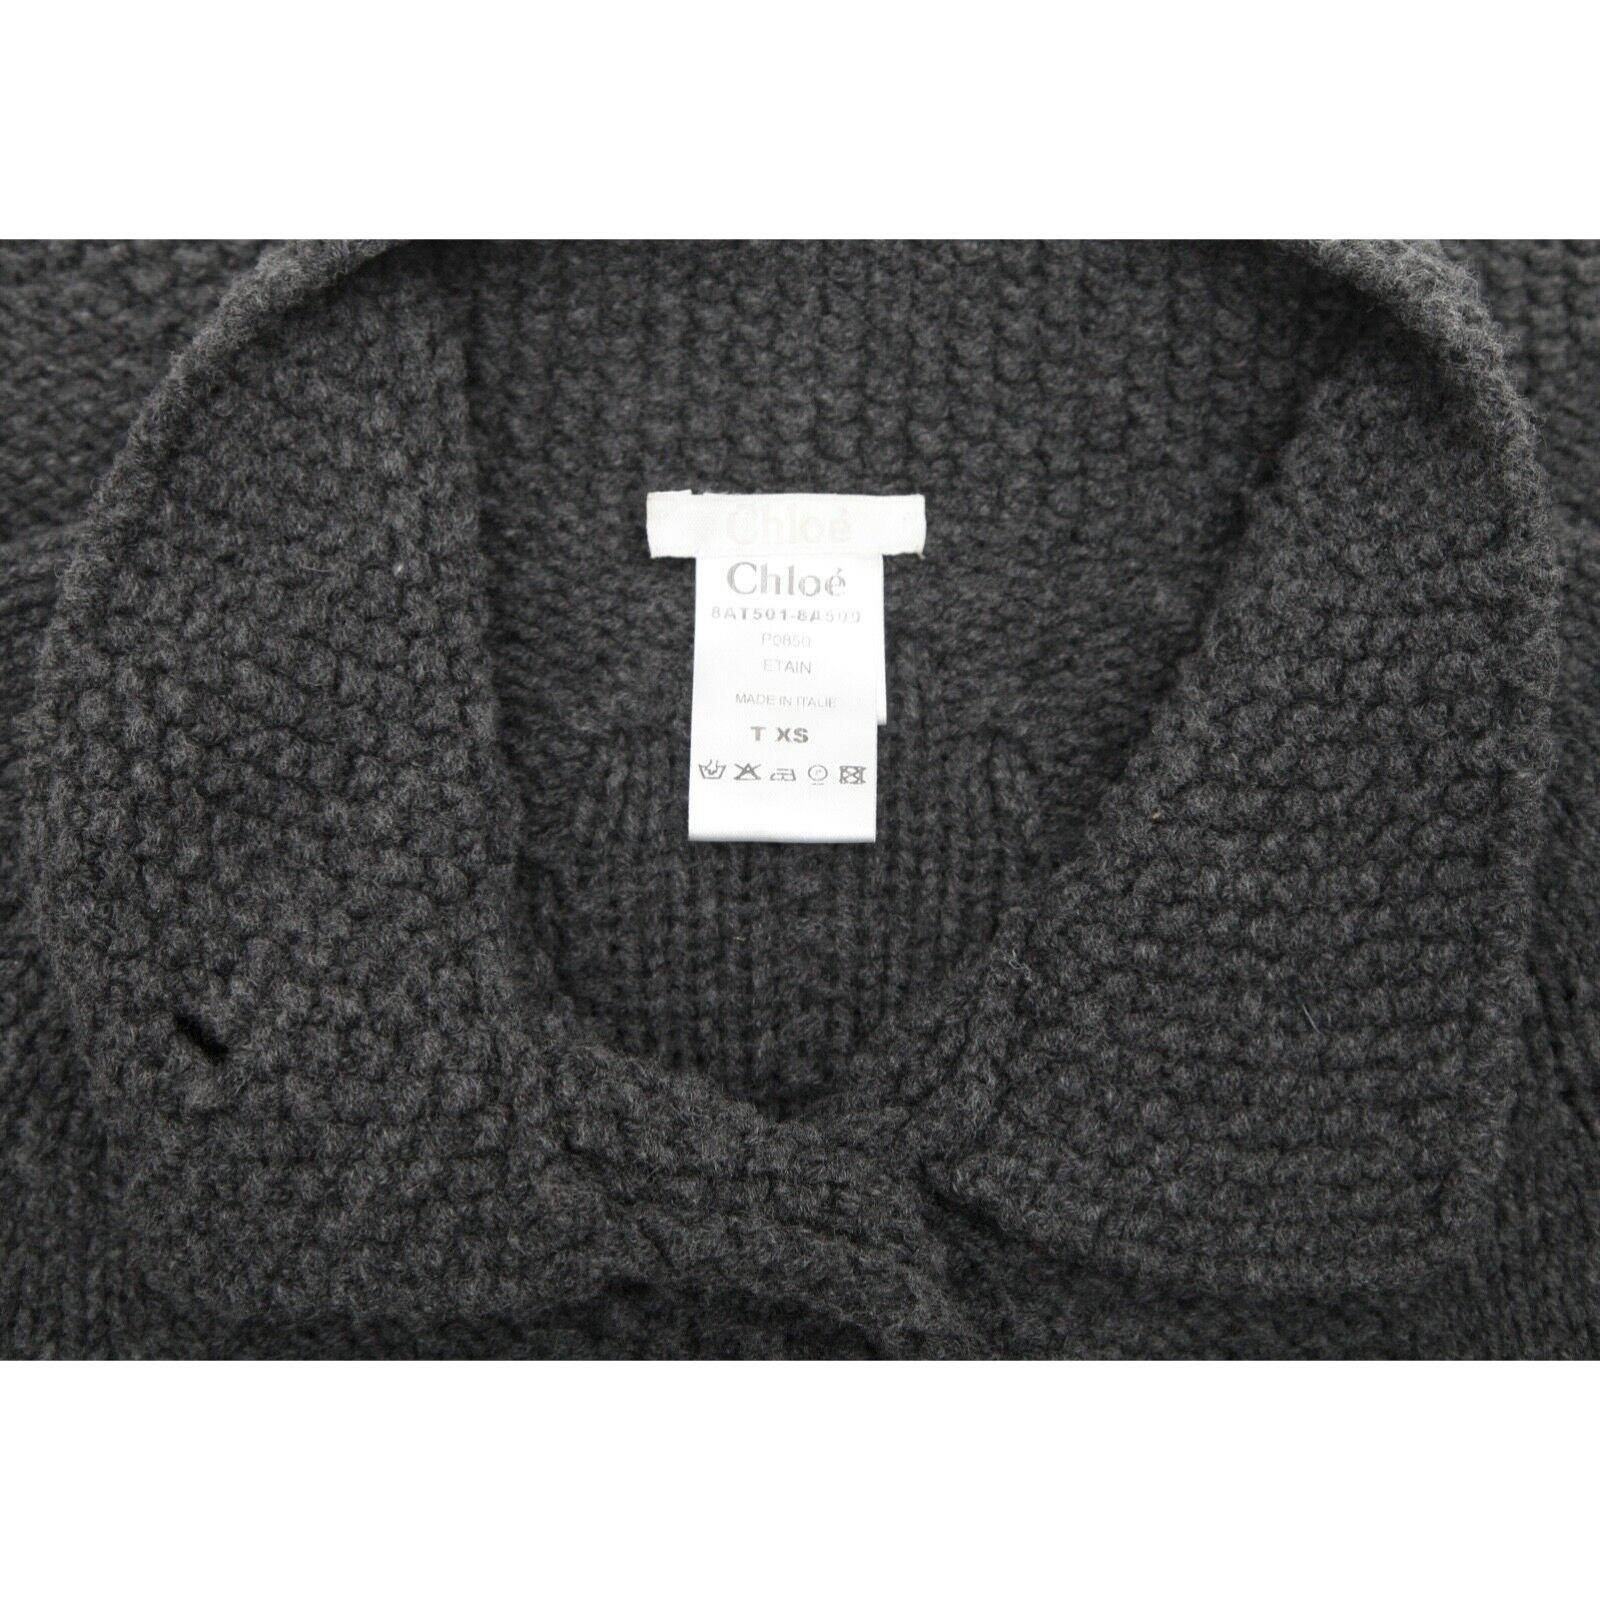 CHLOE Sweater Cardigan Knit Jacket CHARCOAL GREY Long Sleeve Sz XS 2011 For Sale 4